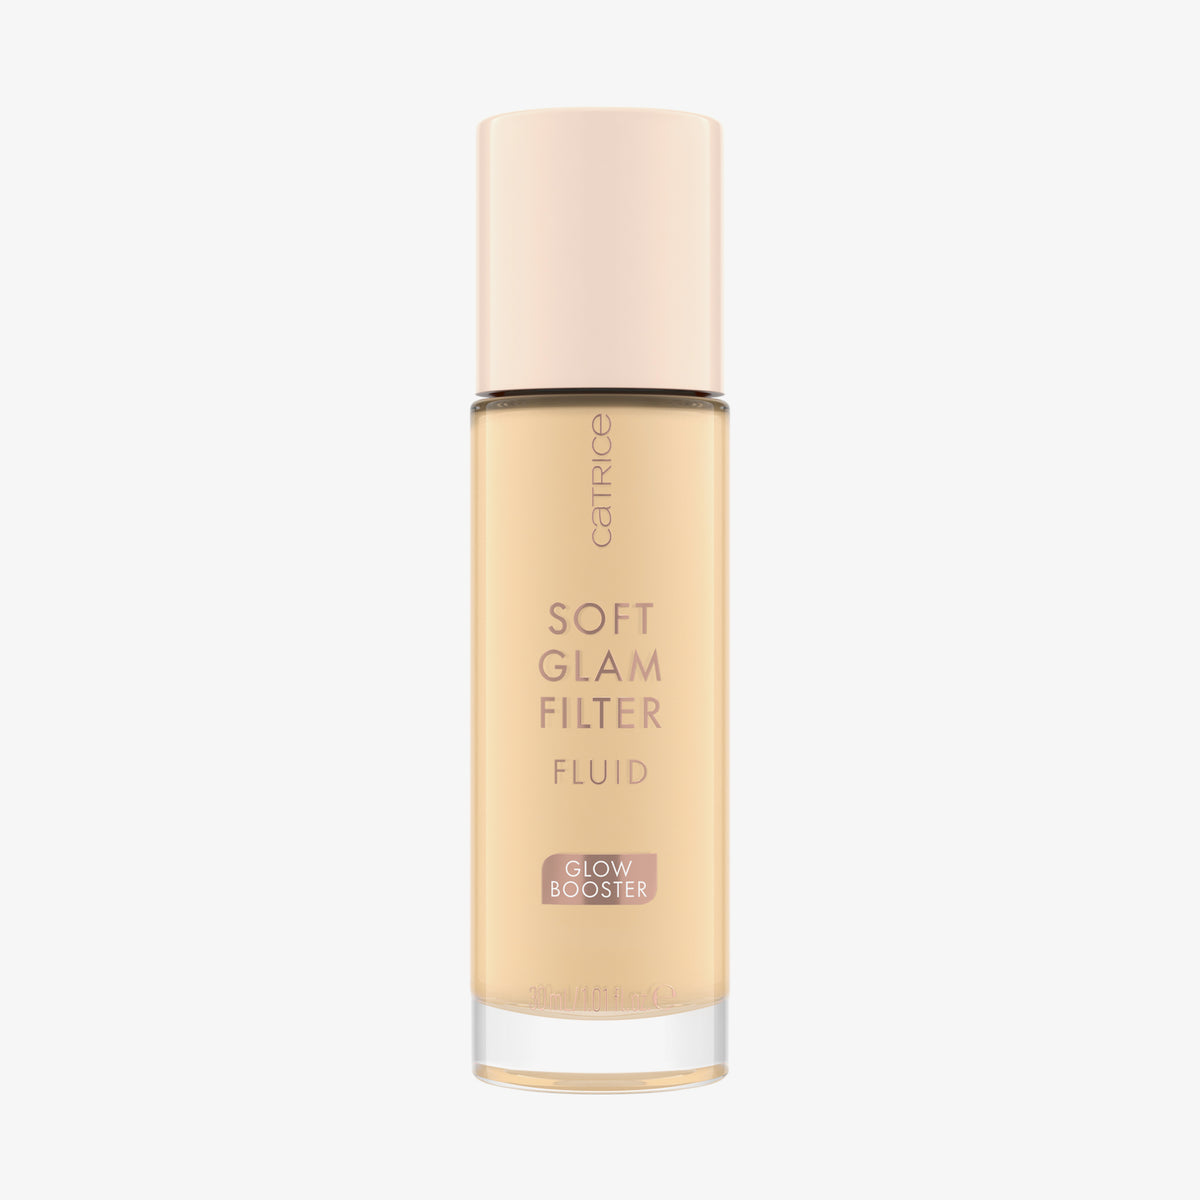 Soft Glam Filter Fluid